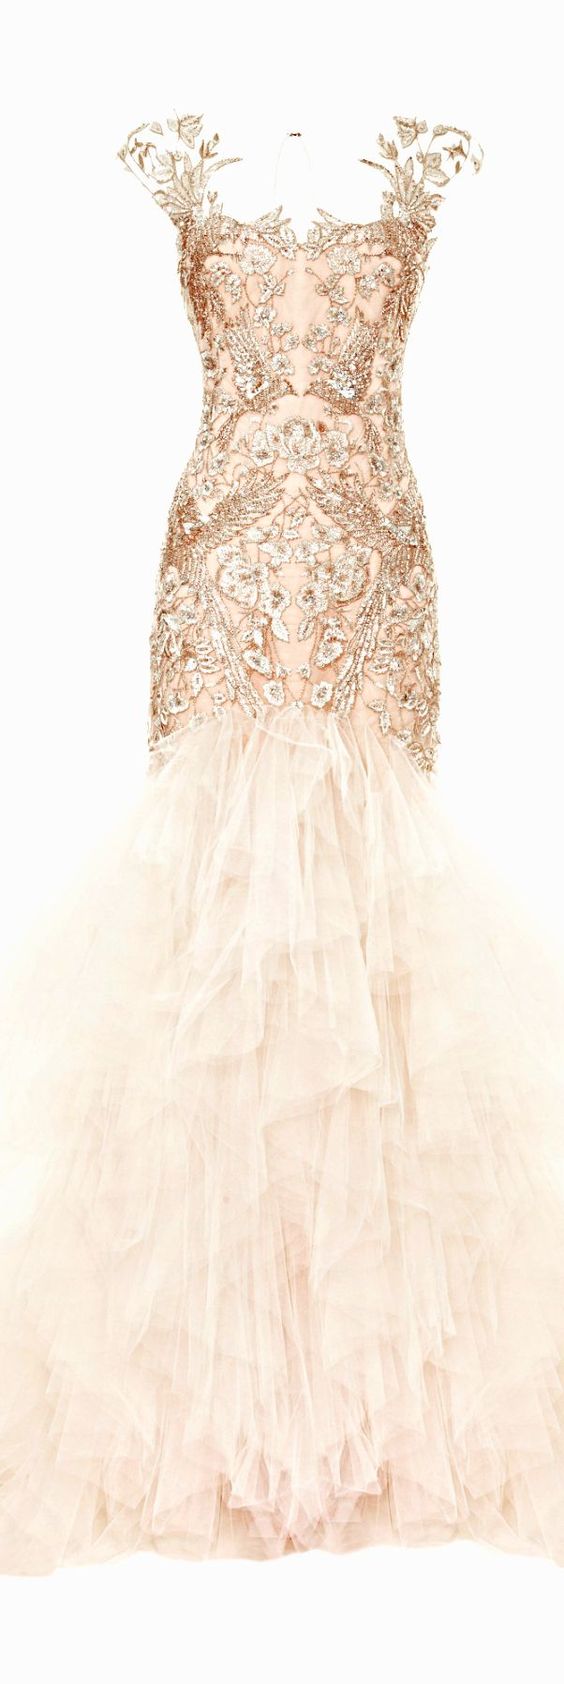 stunning embellished wedding gown